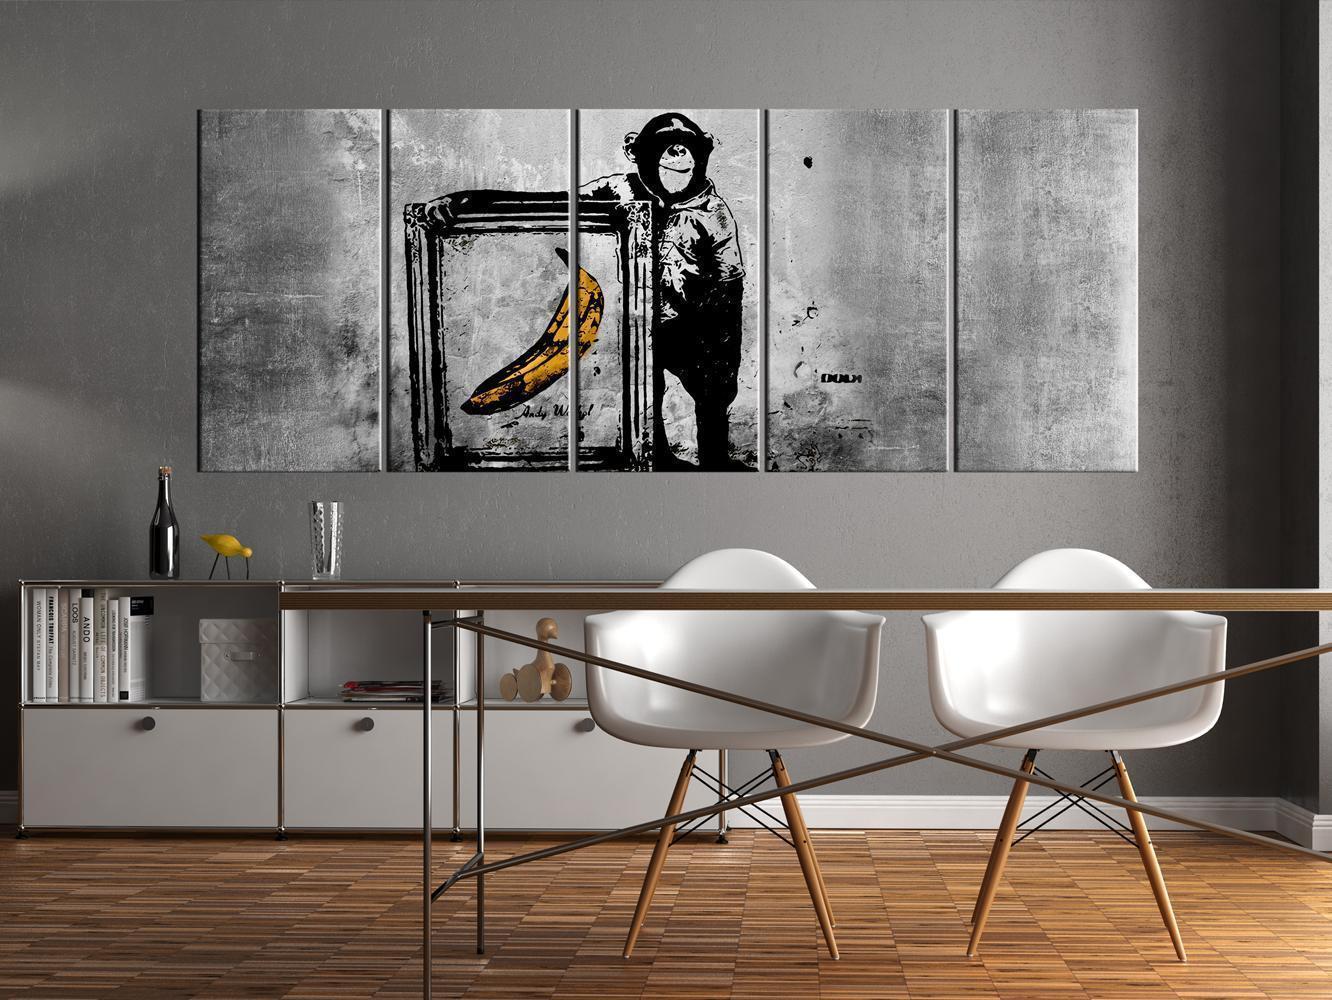 Tableau - Banksy: Monkey with Frame